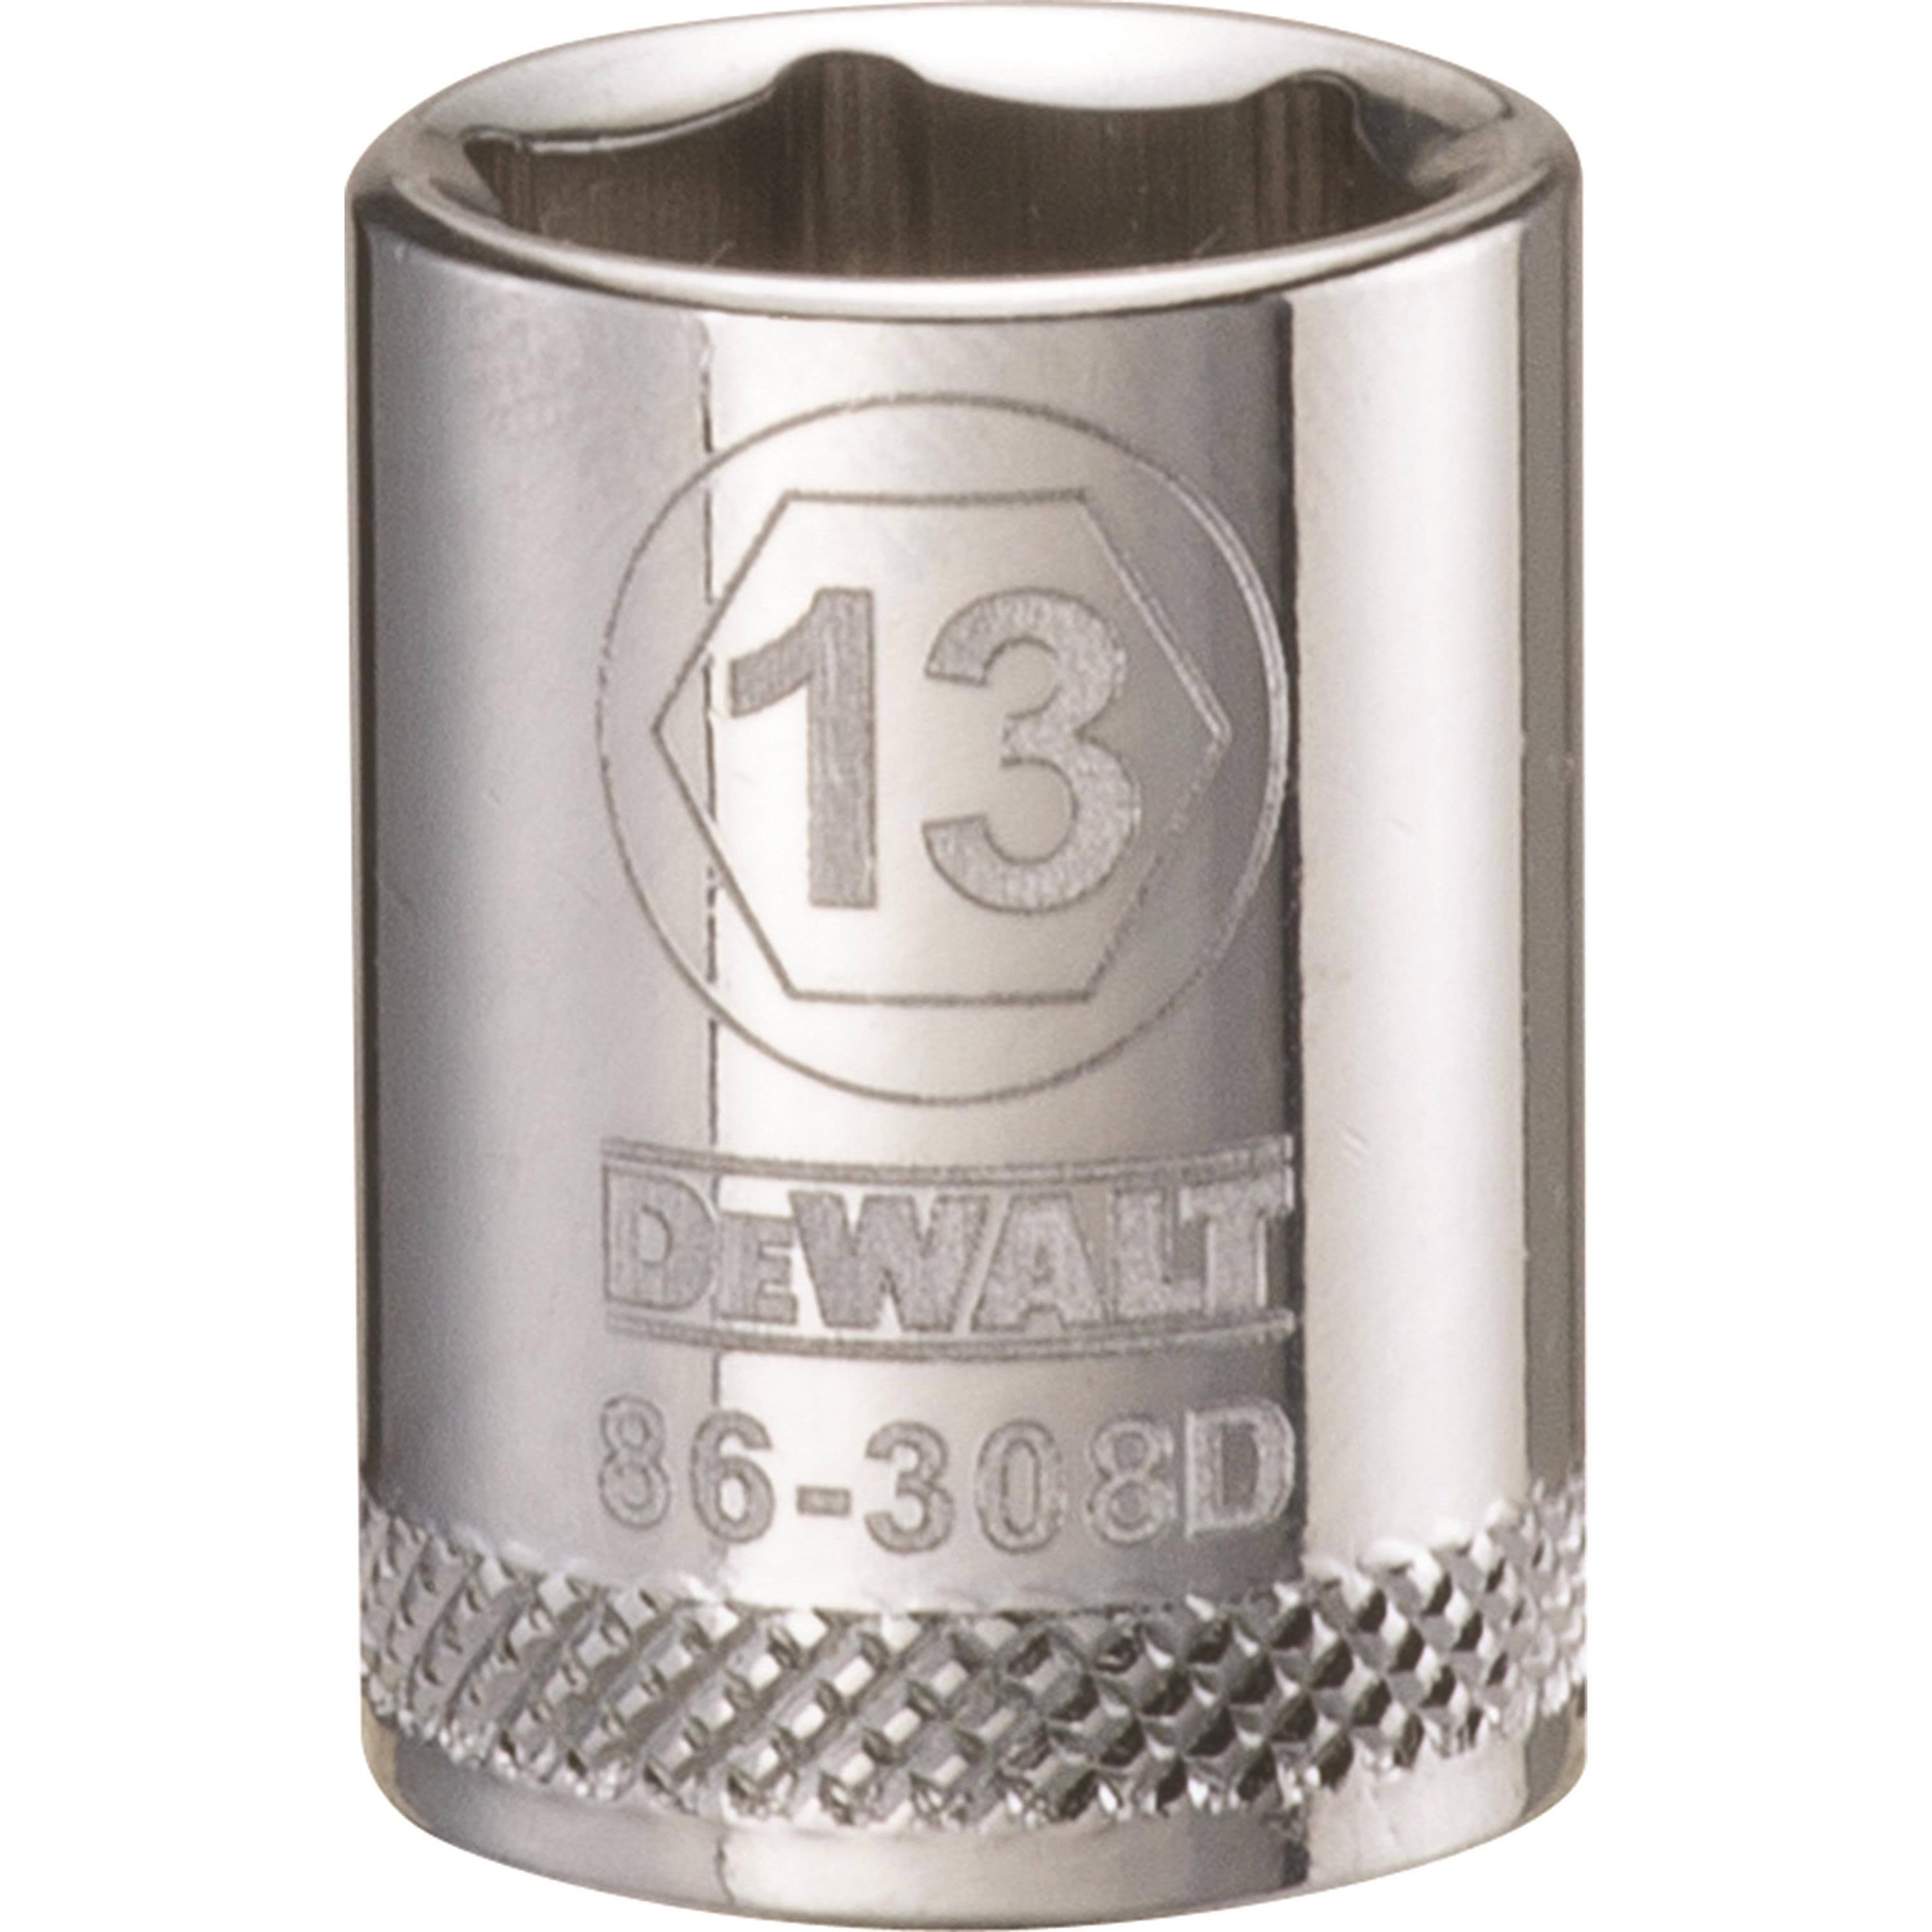 DeWalt Socket - 3/8", 13mm, 6 Point